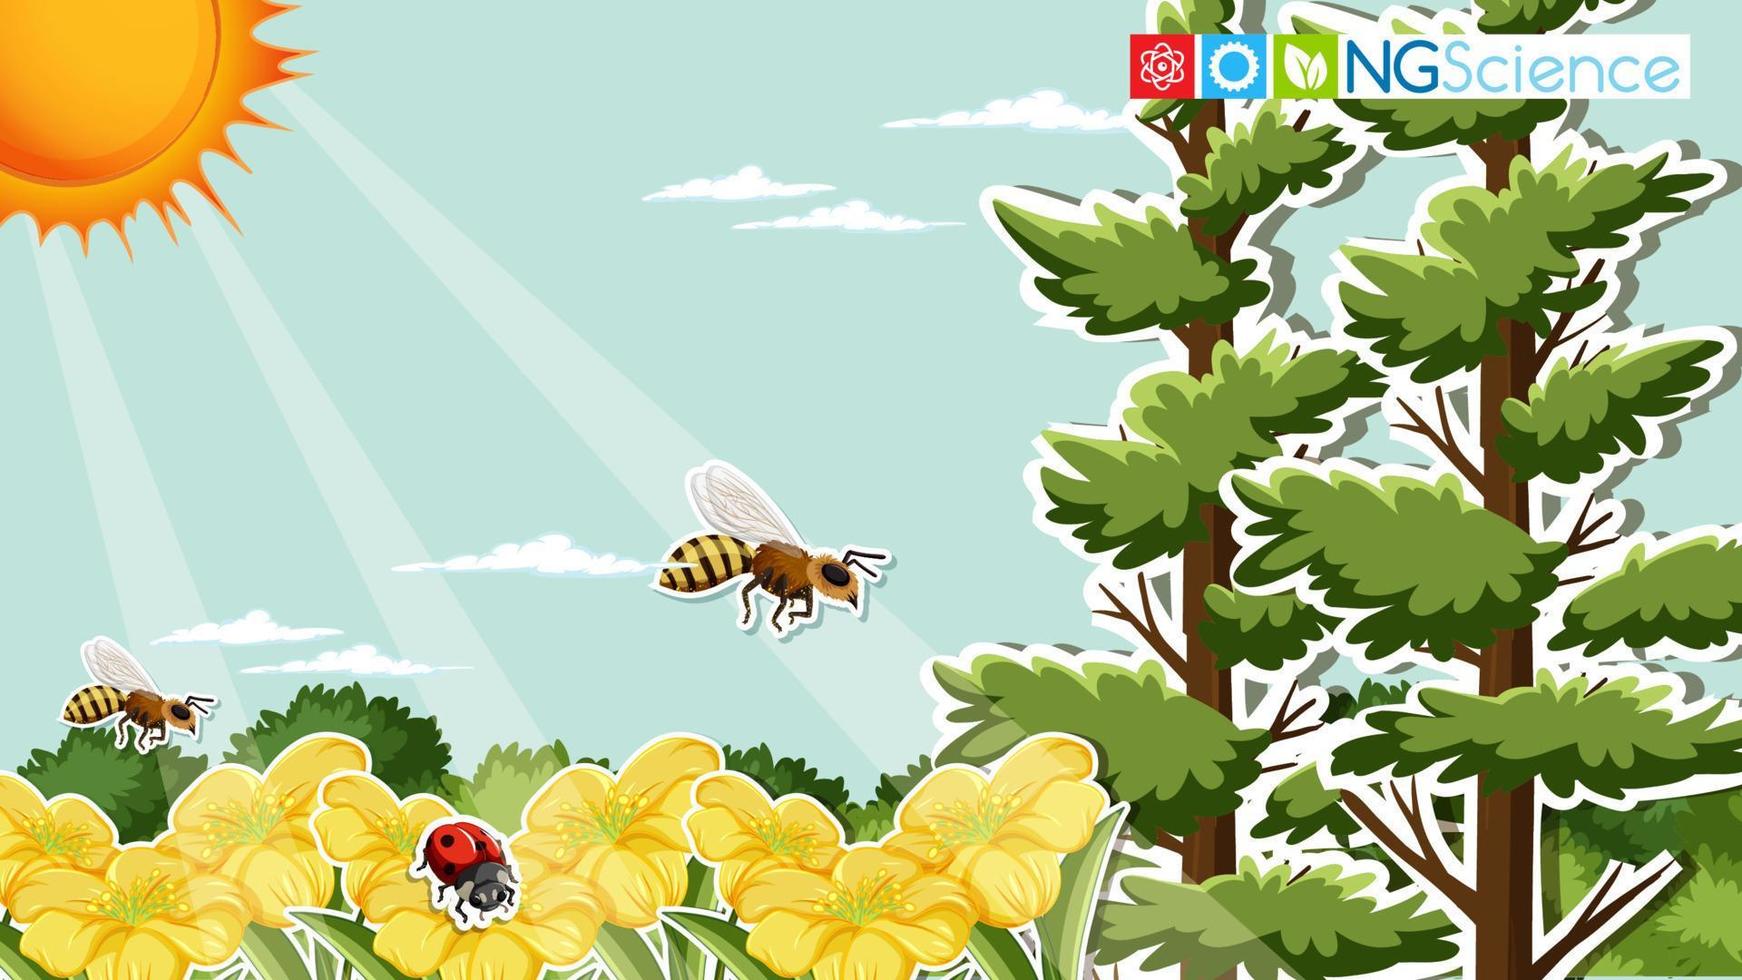 Thumbnail-Design mit Honigbiene im Wald vektor